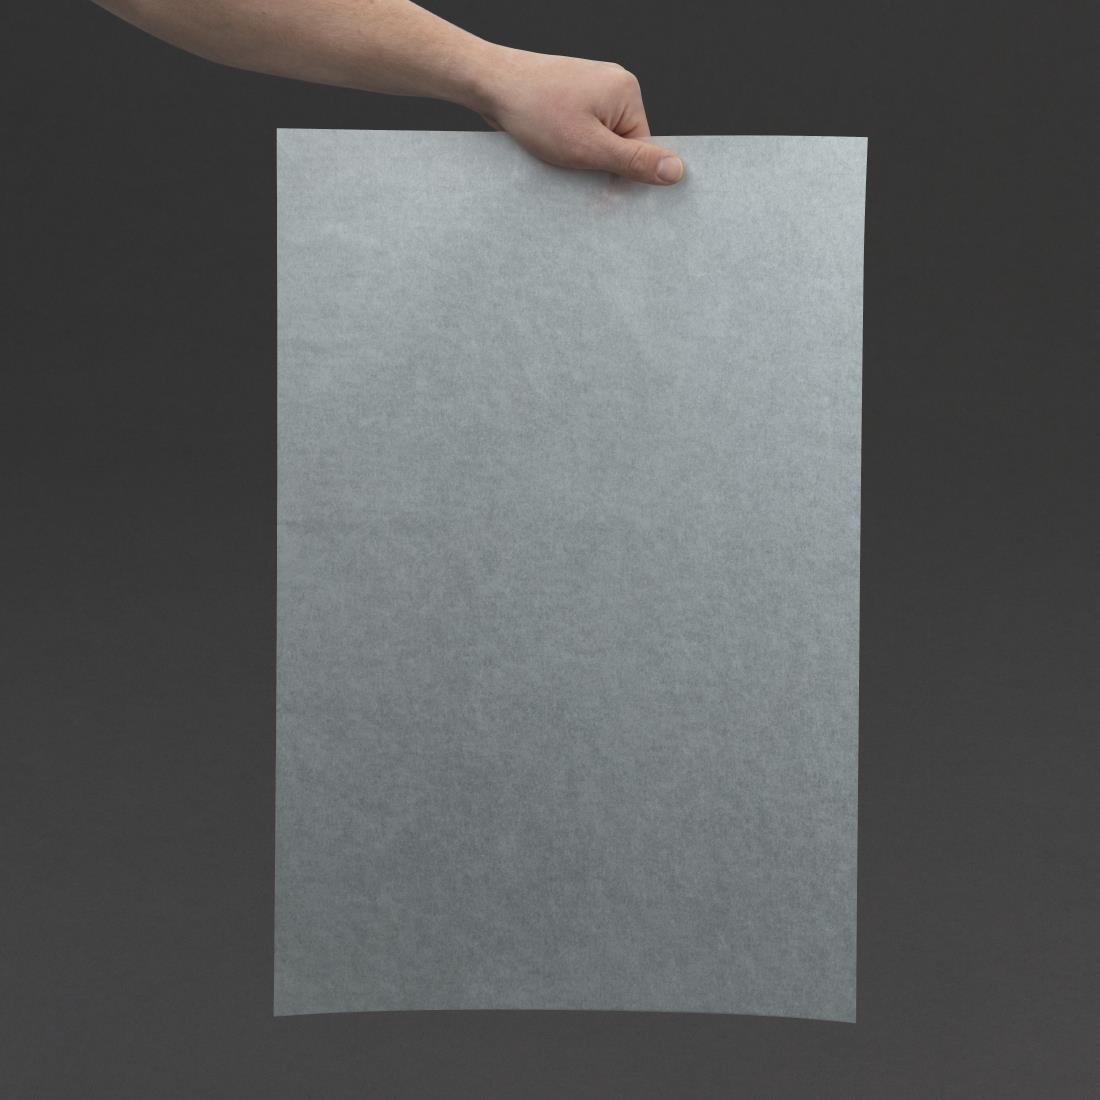 Matfer Bourgeat Exopap Baking Paper 600 x 400mm (Pack of 500)